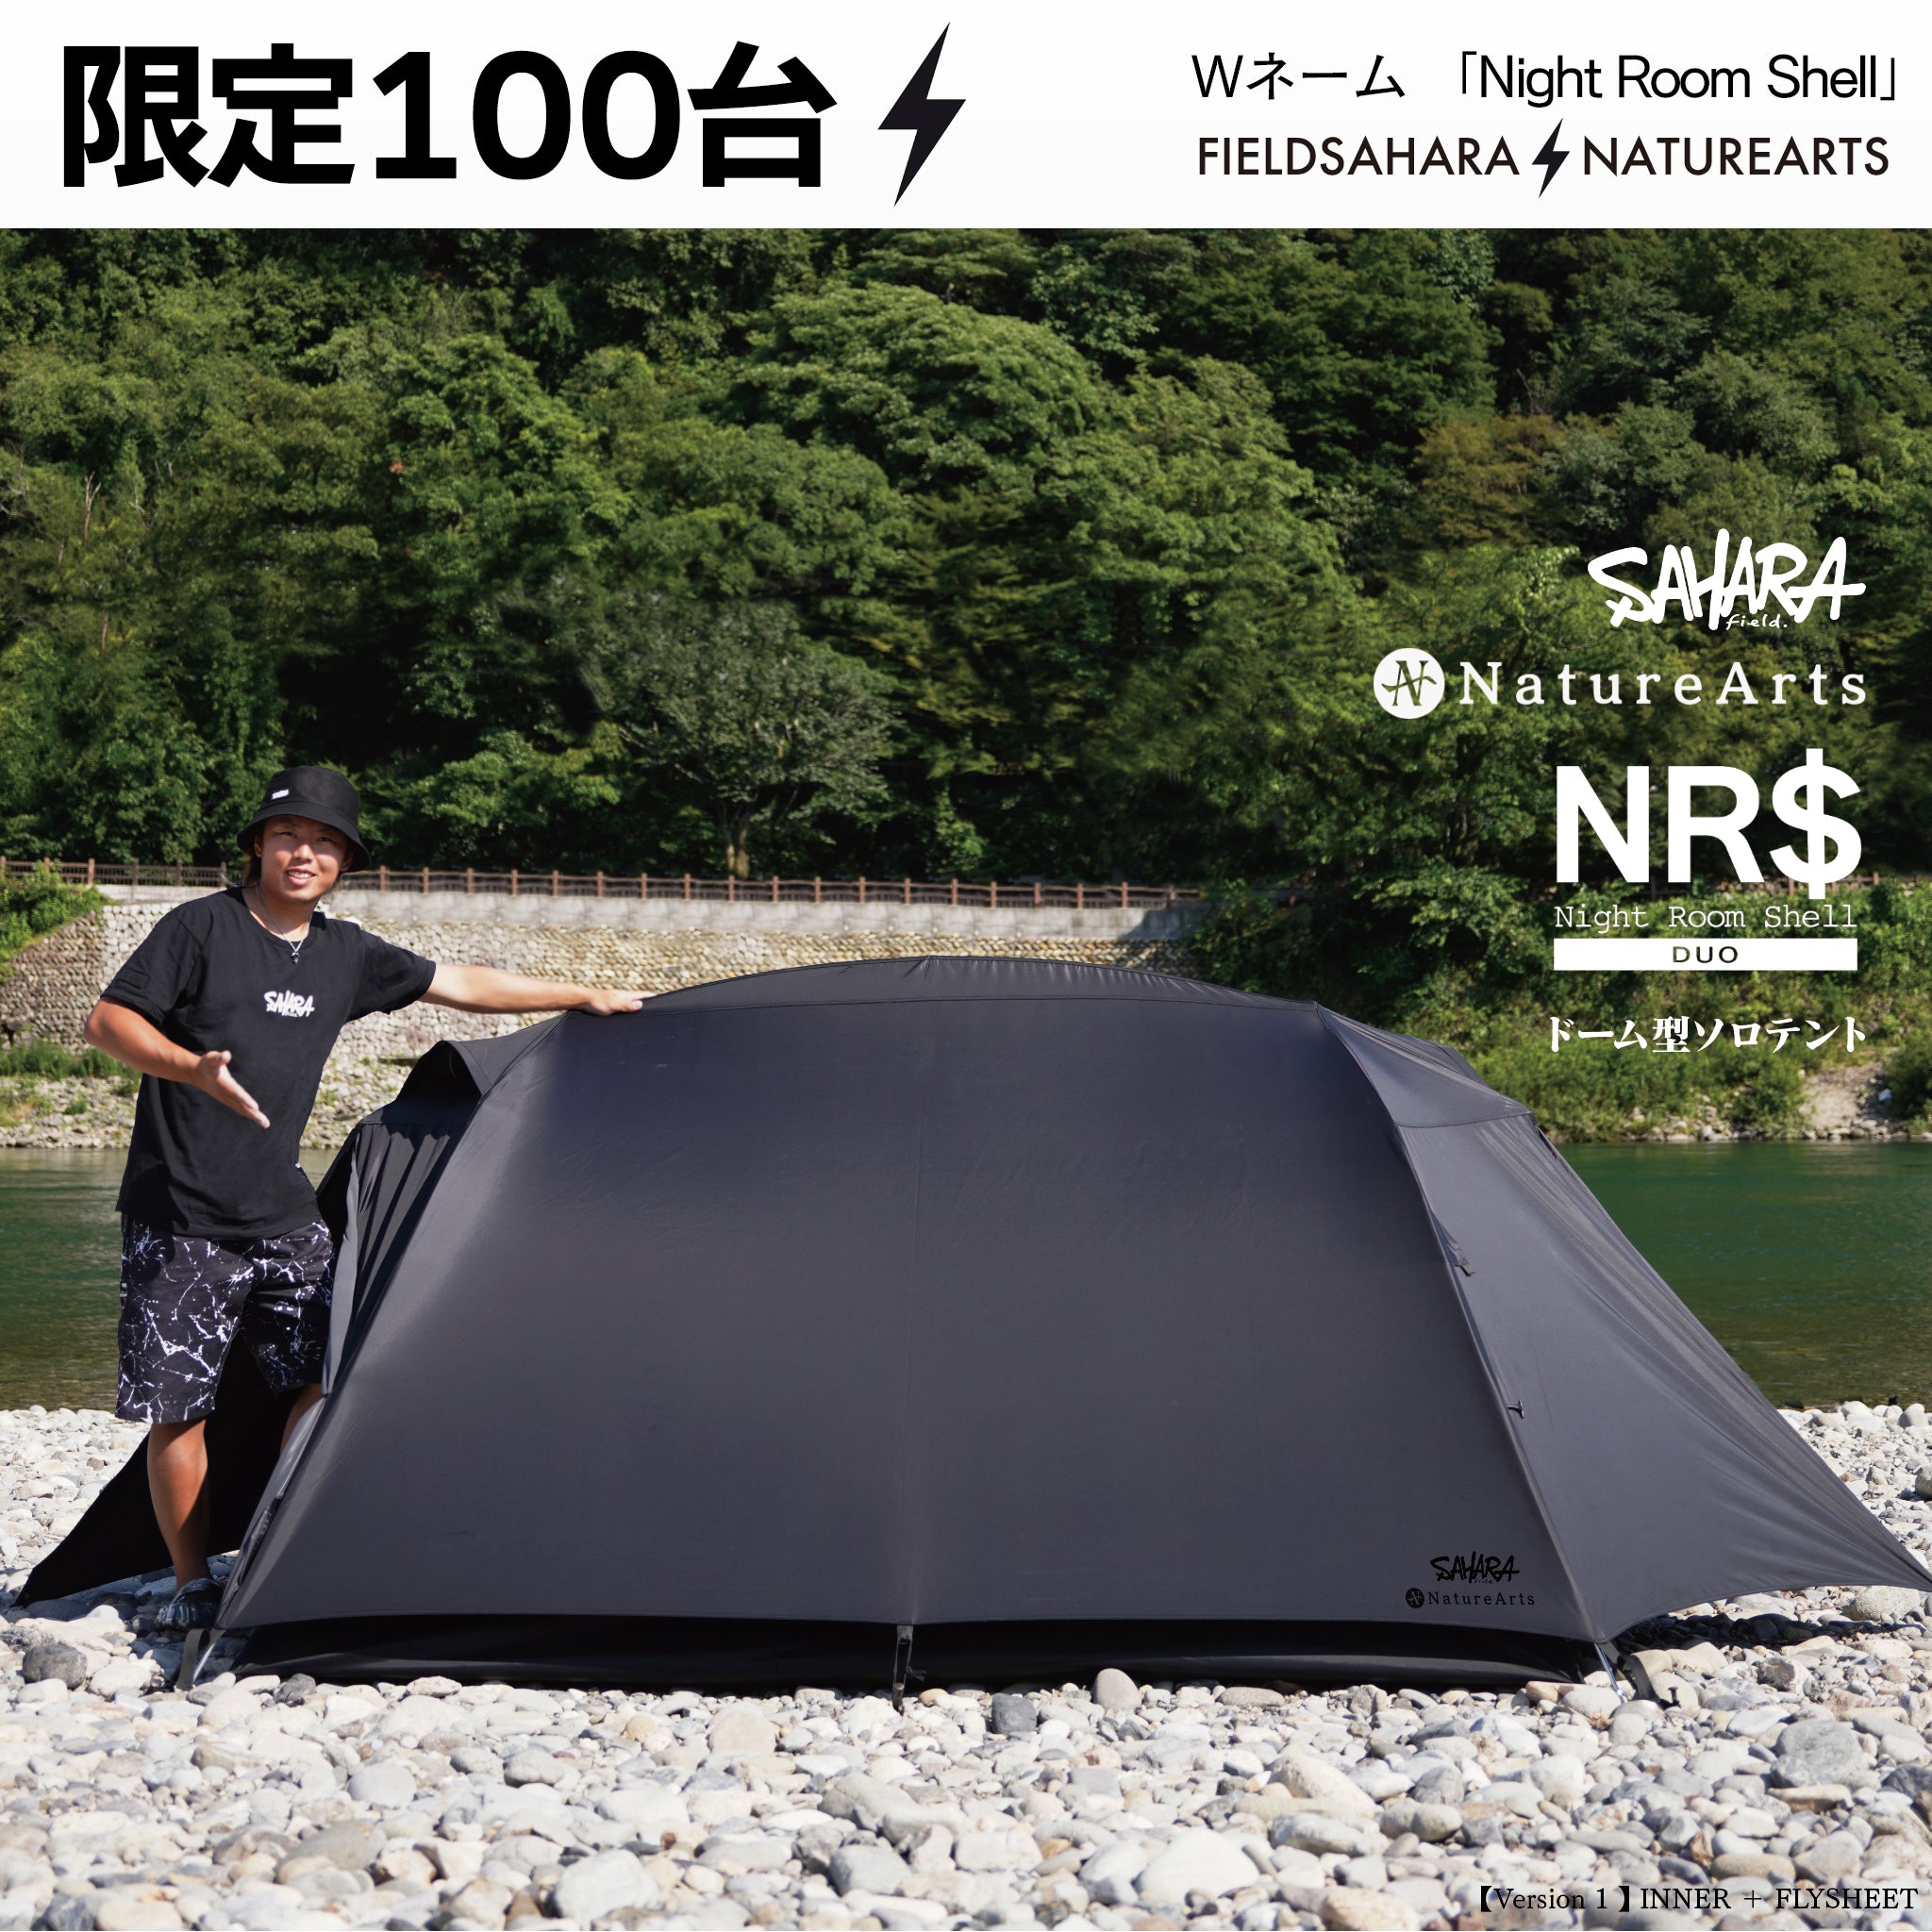 FieldSAHARA × NatureArts Night Room Shell Duoドーム型ソロテント 限定100台 受注販売